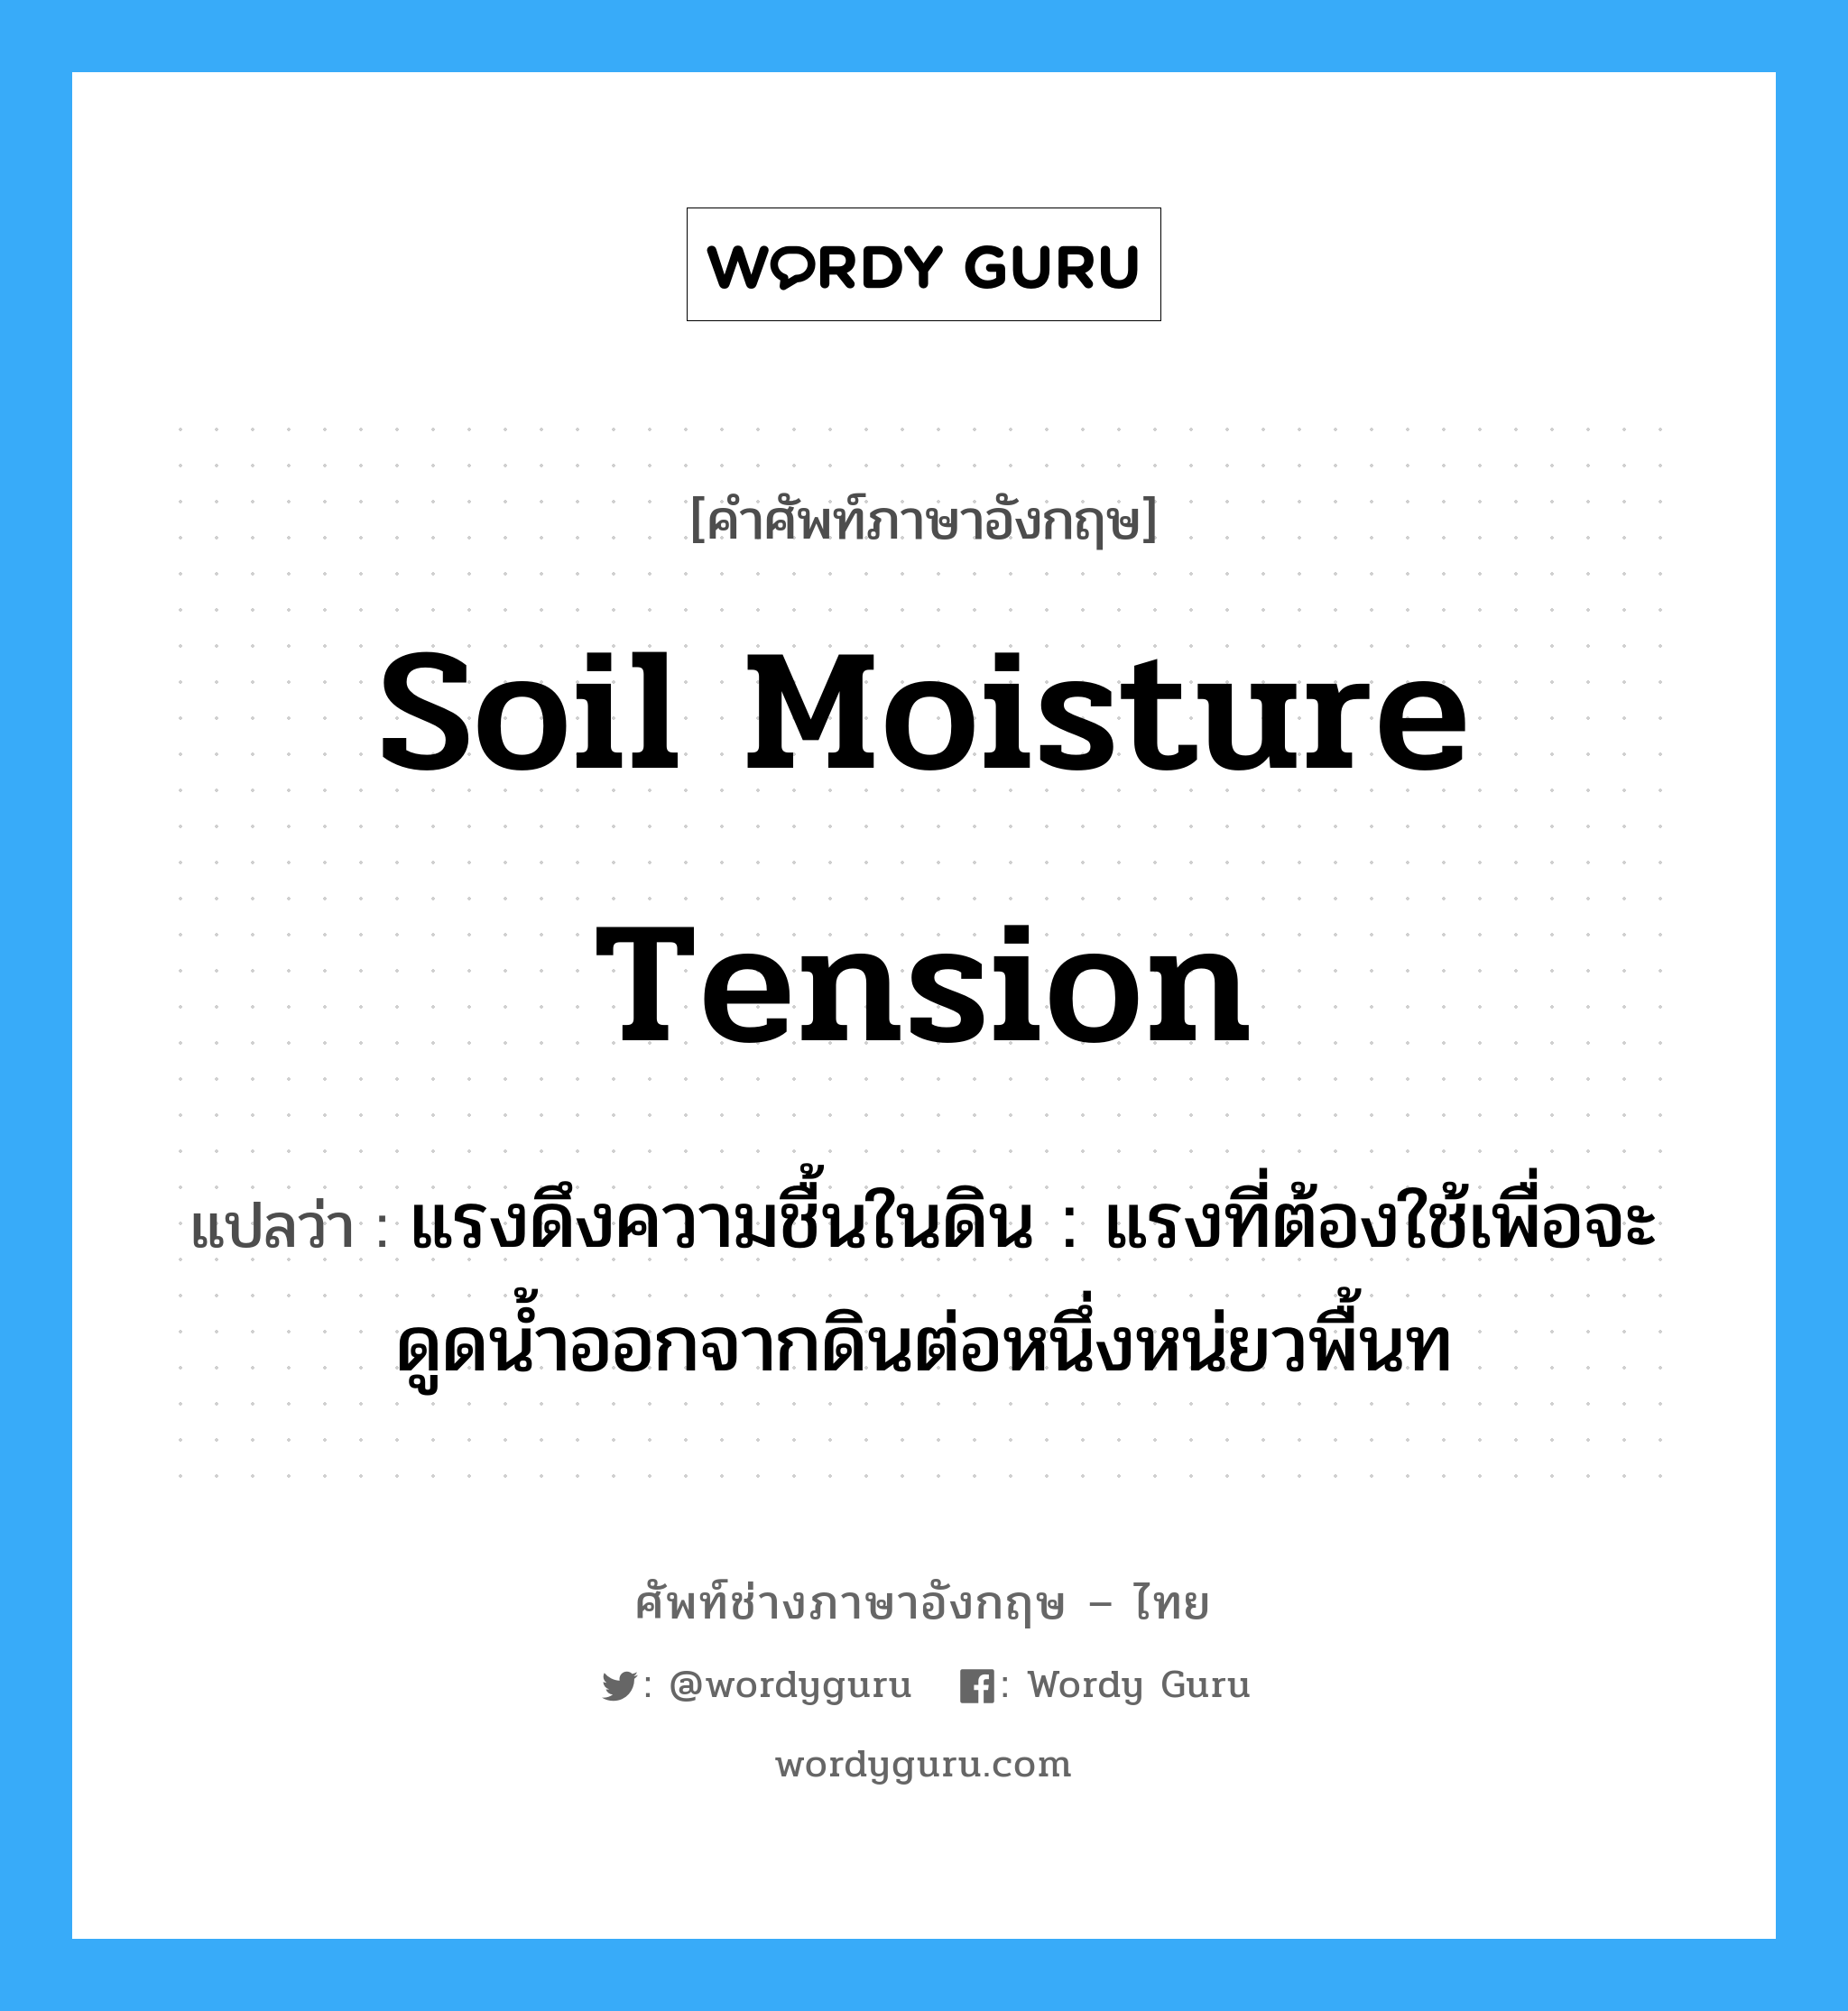 soil moisture tension แปลว่า?, คำศัพท์ช่างภาษาอังกฤษ - ไทย soil moisture tension คำศัพท์ภาษาอังกฤษ soil moisture tension แปลว่า แรงดึงความชื้นในดิน : แรงที่ต้องใช้เพื่อจะดูดน้ำออกจากดินต่อหนึ่งหน่ยวพื้นท